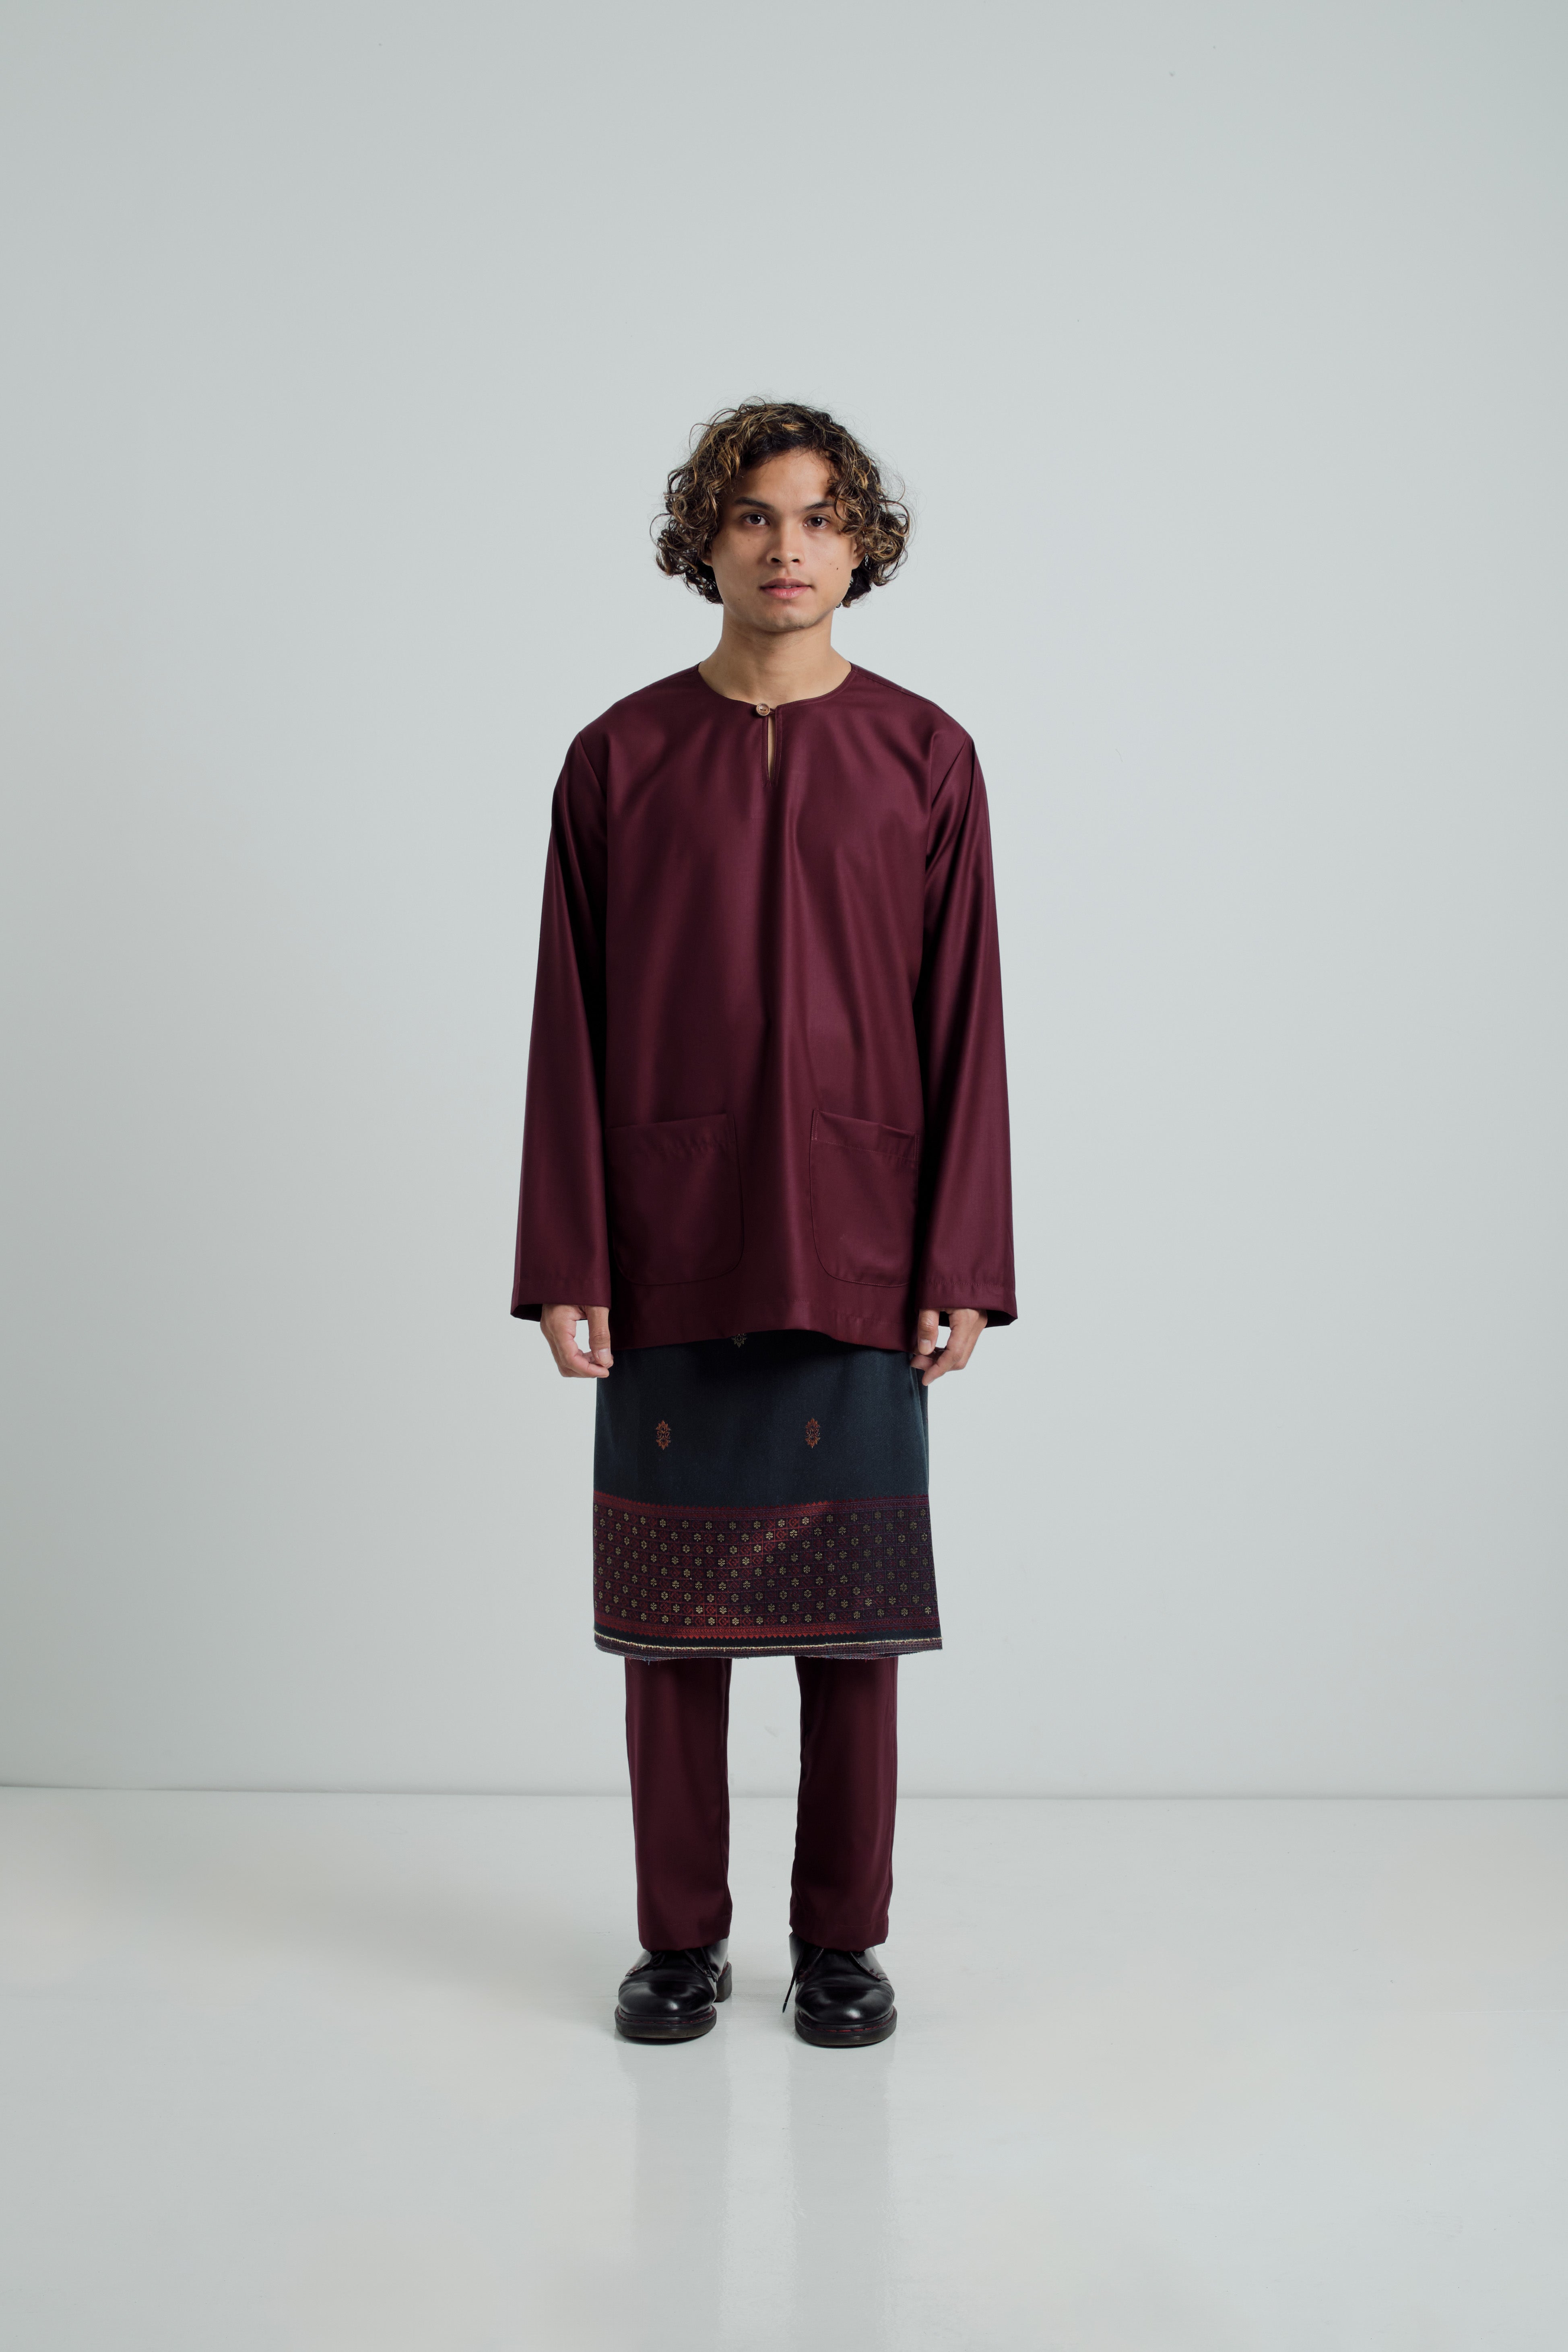 Patawali Modern Fit Baju Melayu Teluk Belanga - Dark Maroon